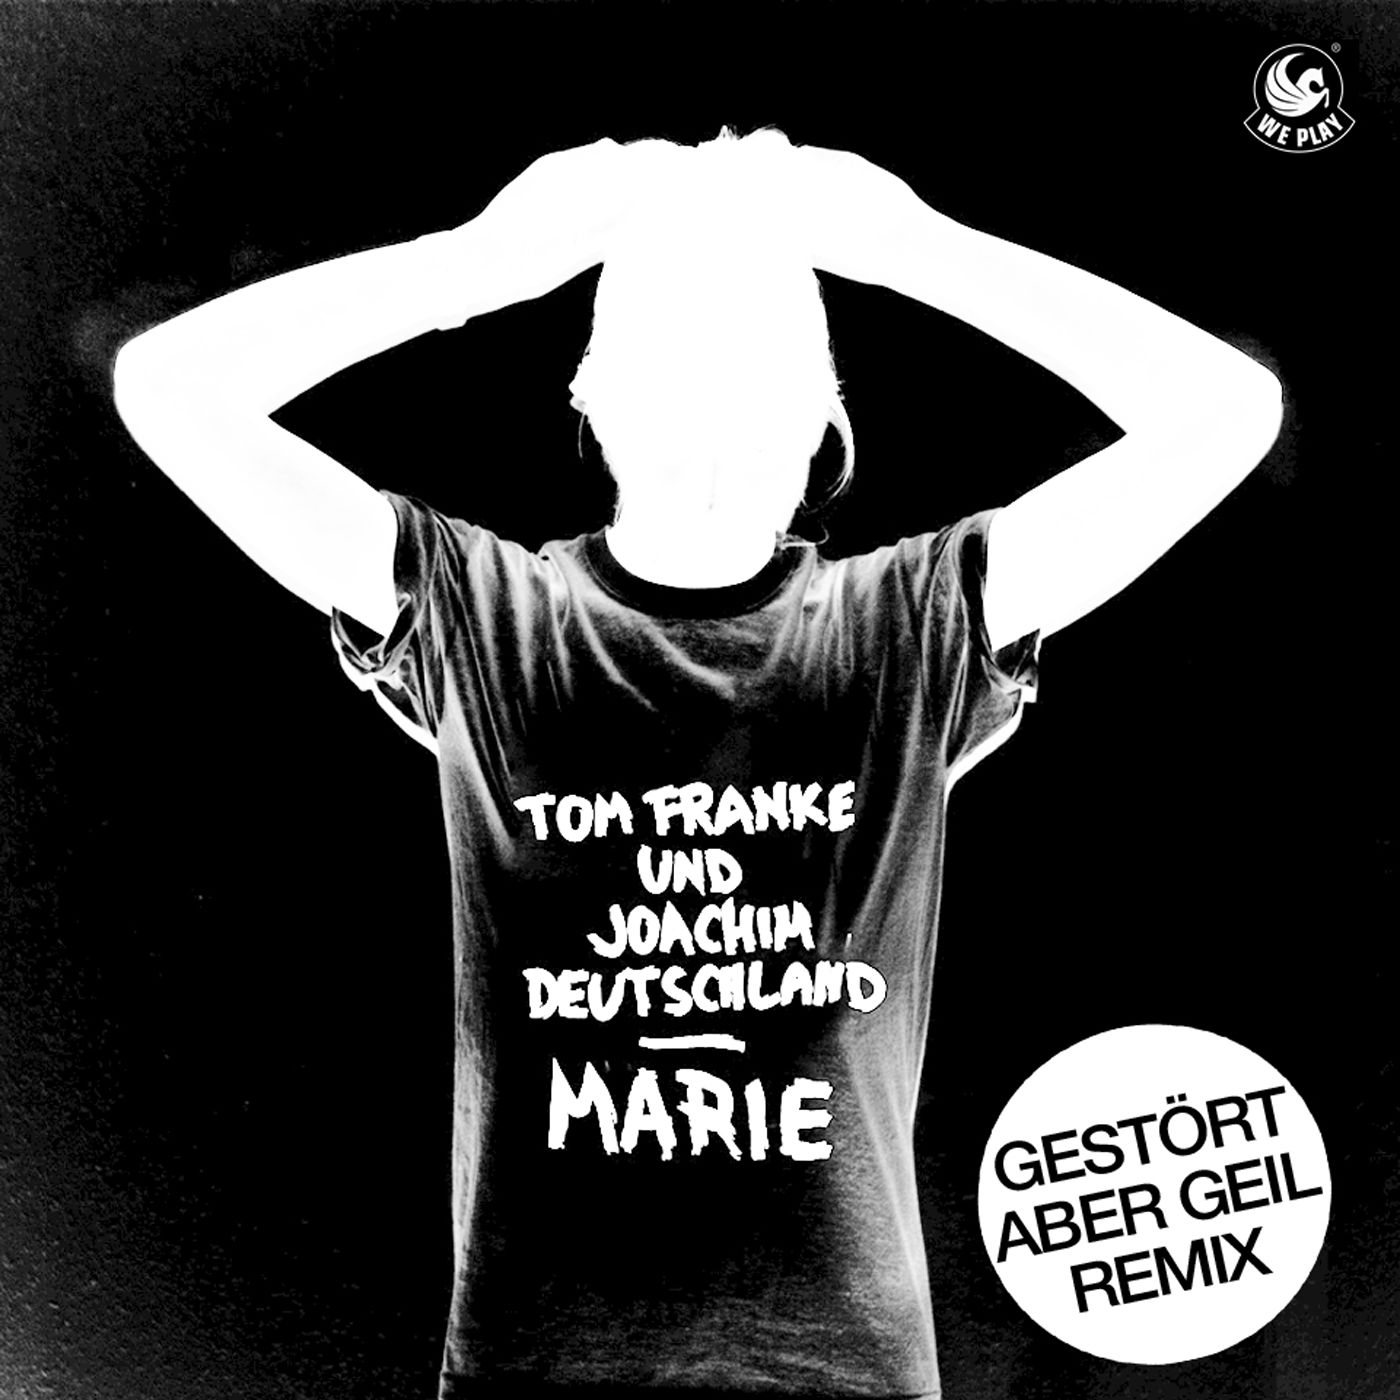 Marie Gest rt aber GeiL Remix